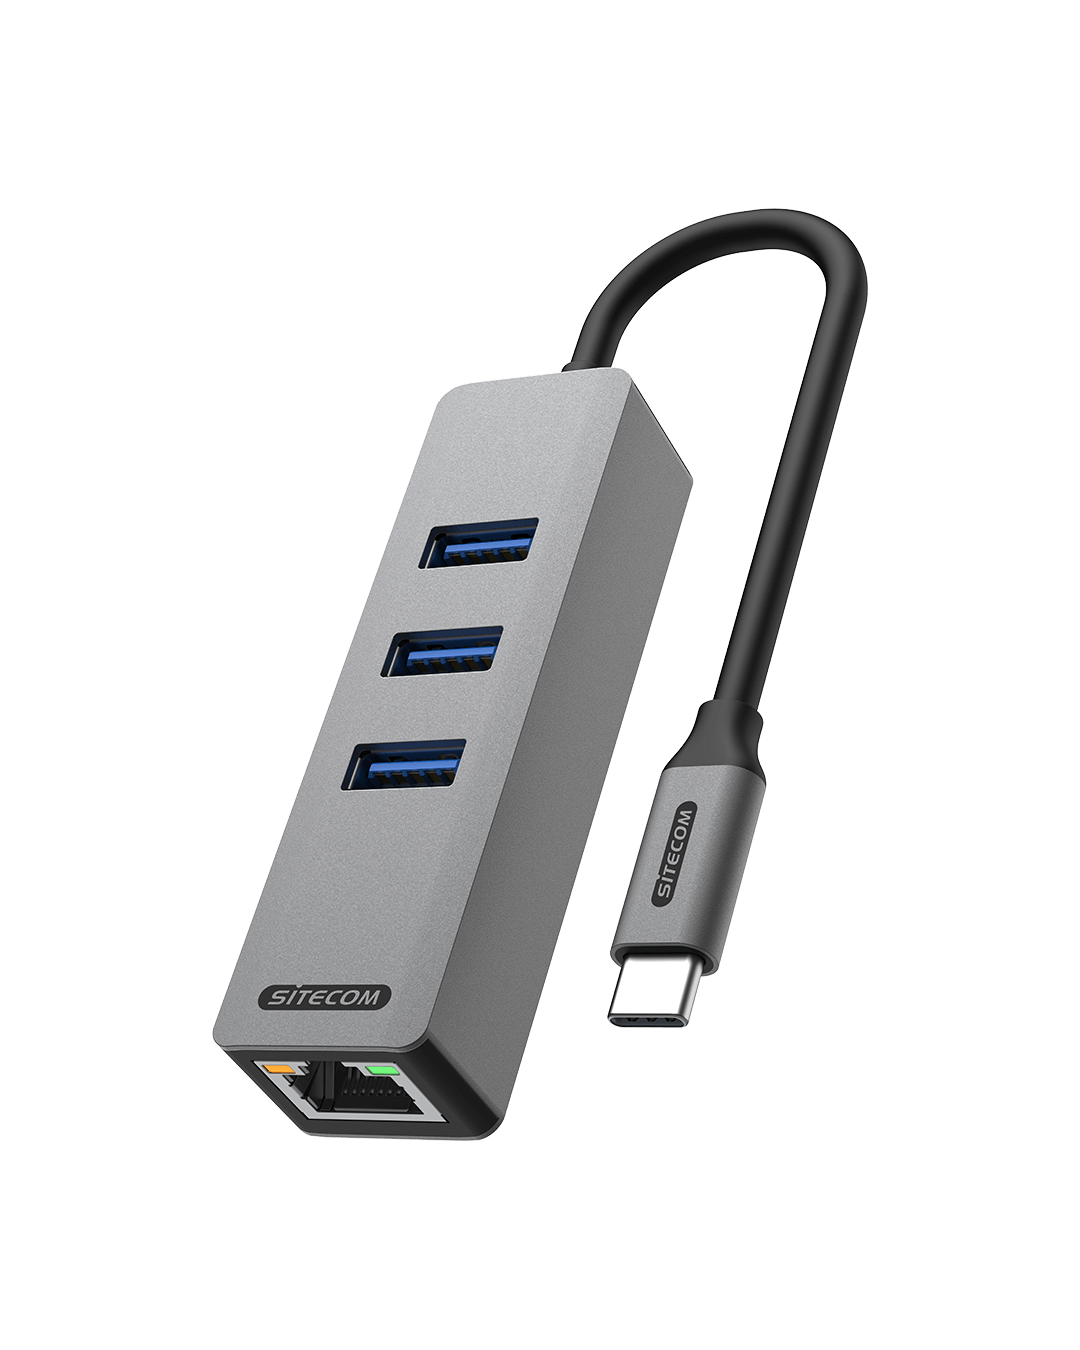 Sitecom - USB-C to Ethernet + 3x USB hub - AD-1008